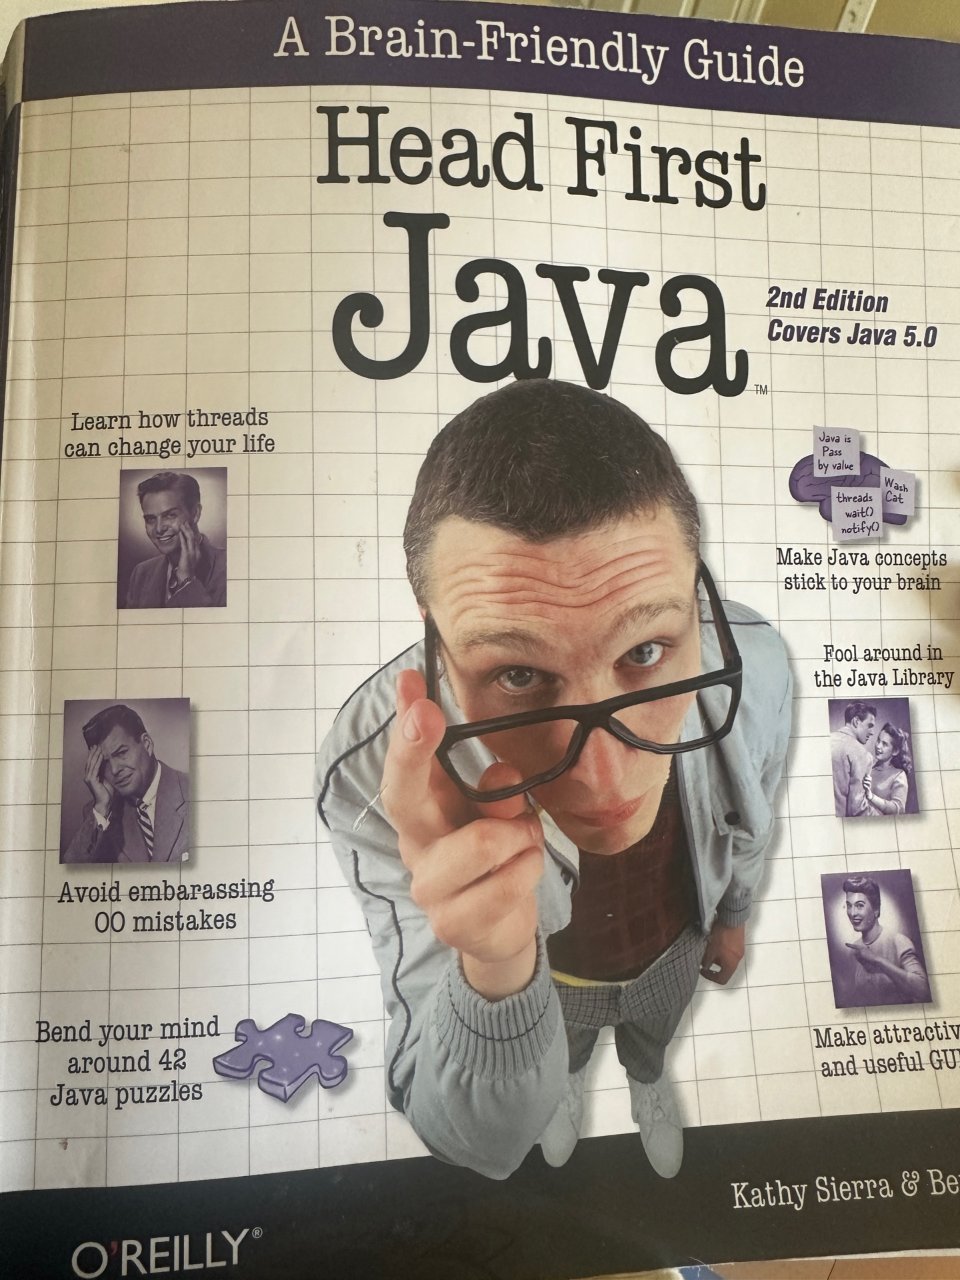 Java入门有宝典这本书我先冲了...